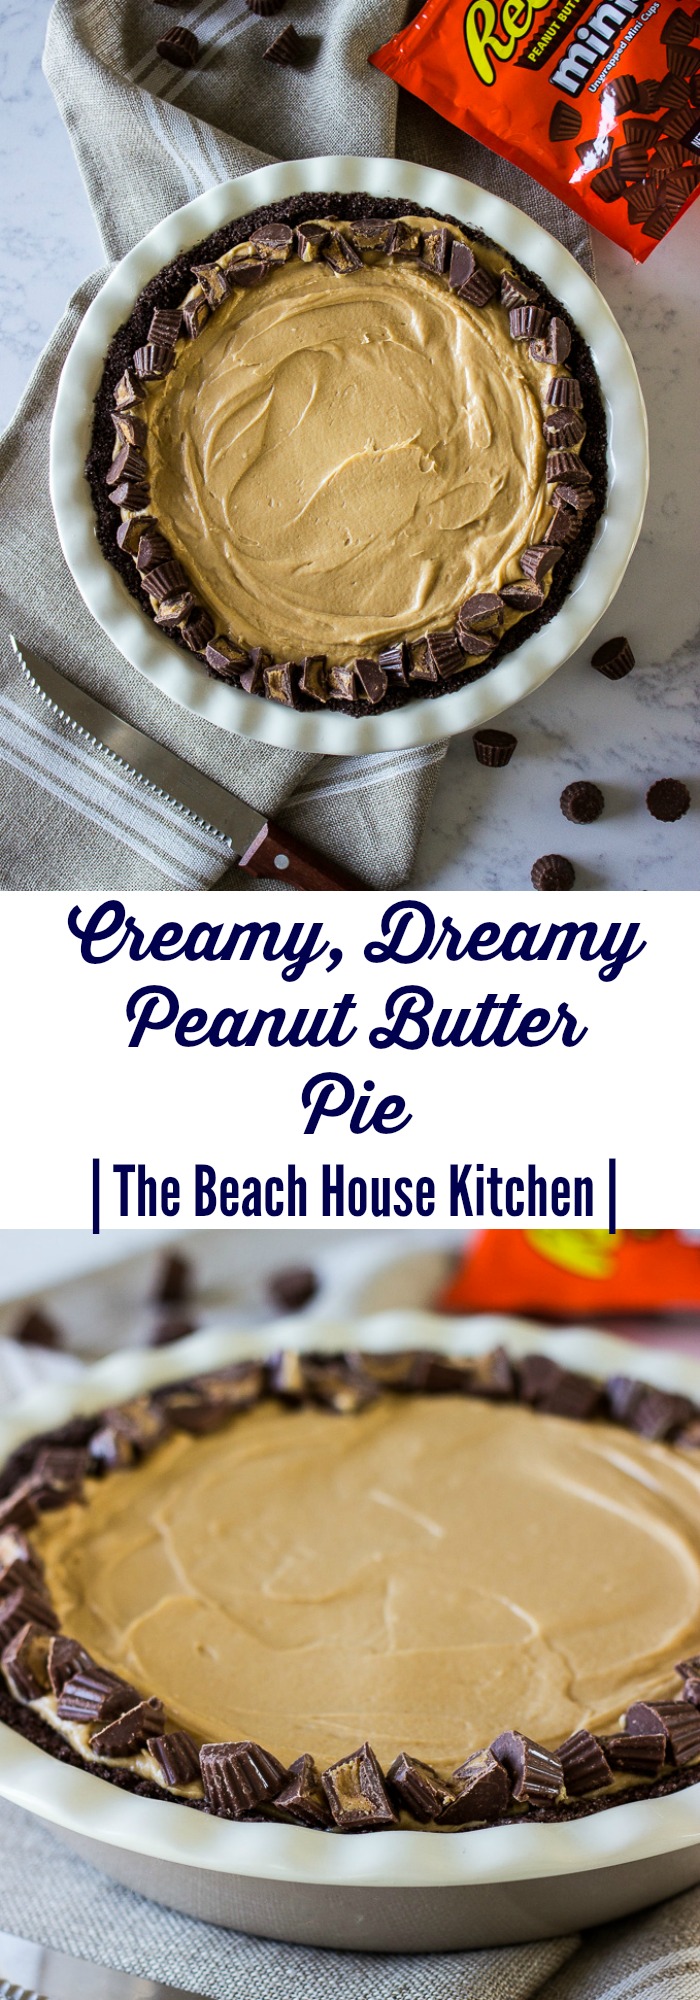 Creamy, Dreamy Peanut Butter Pie